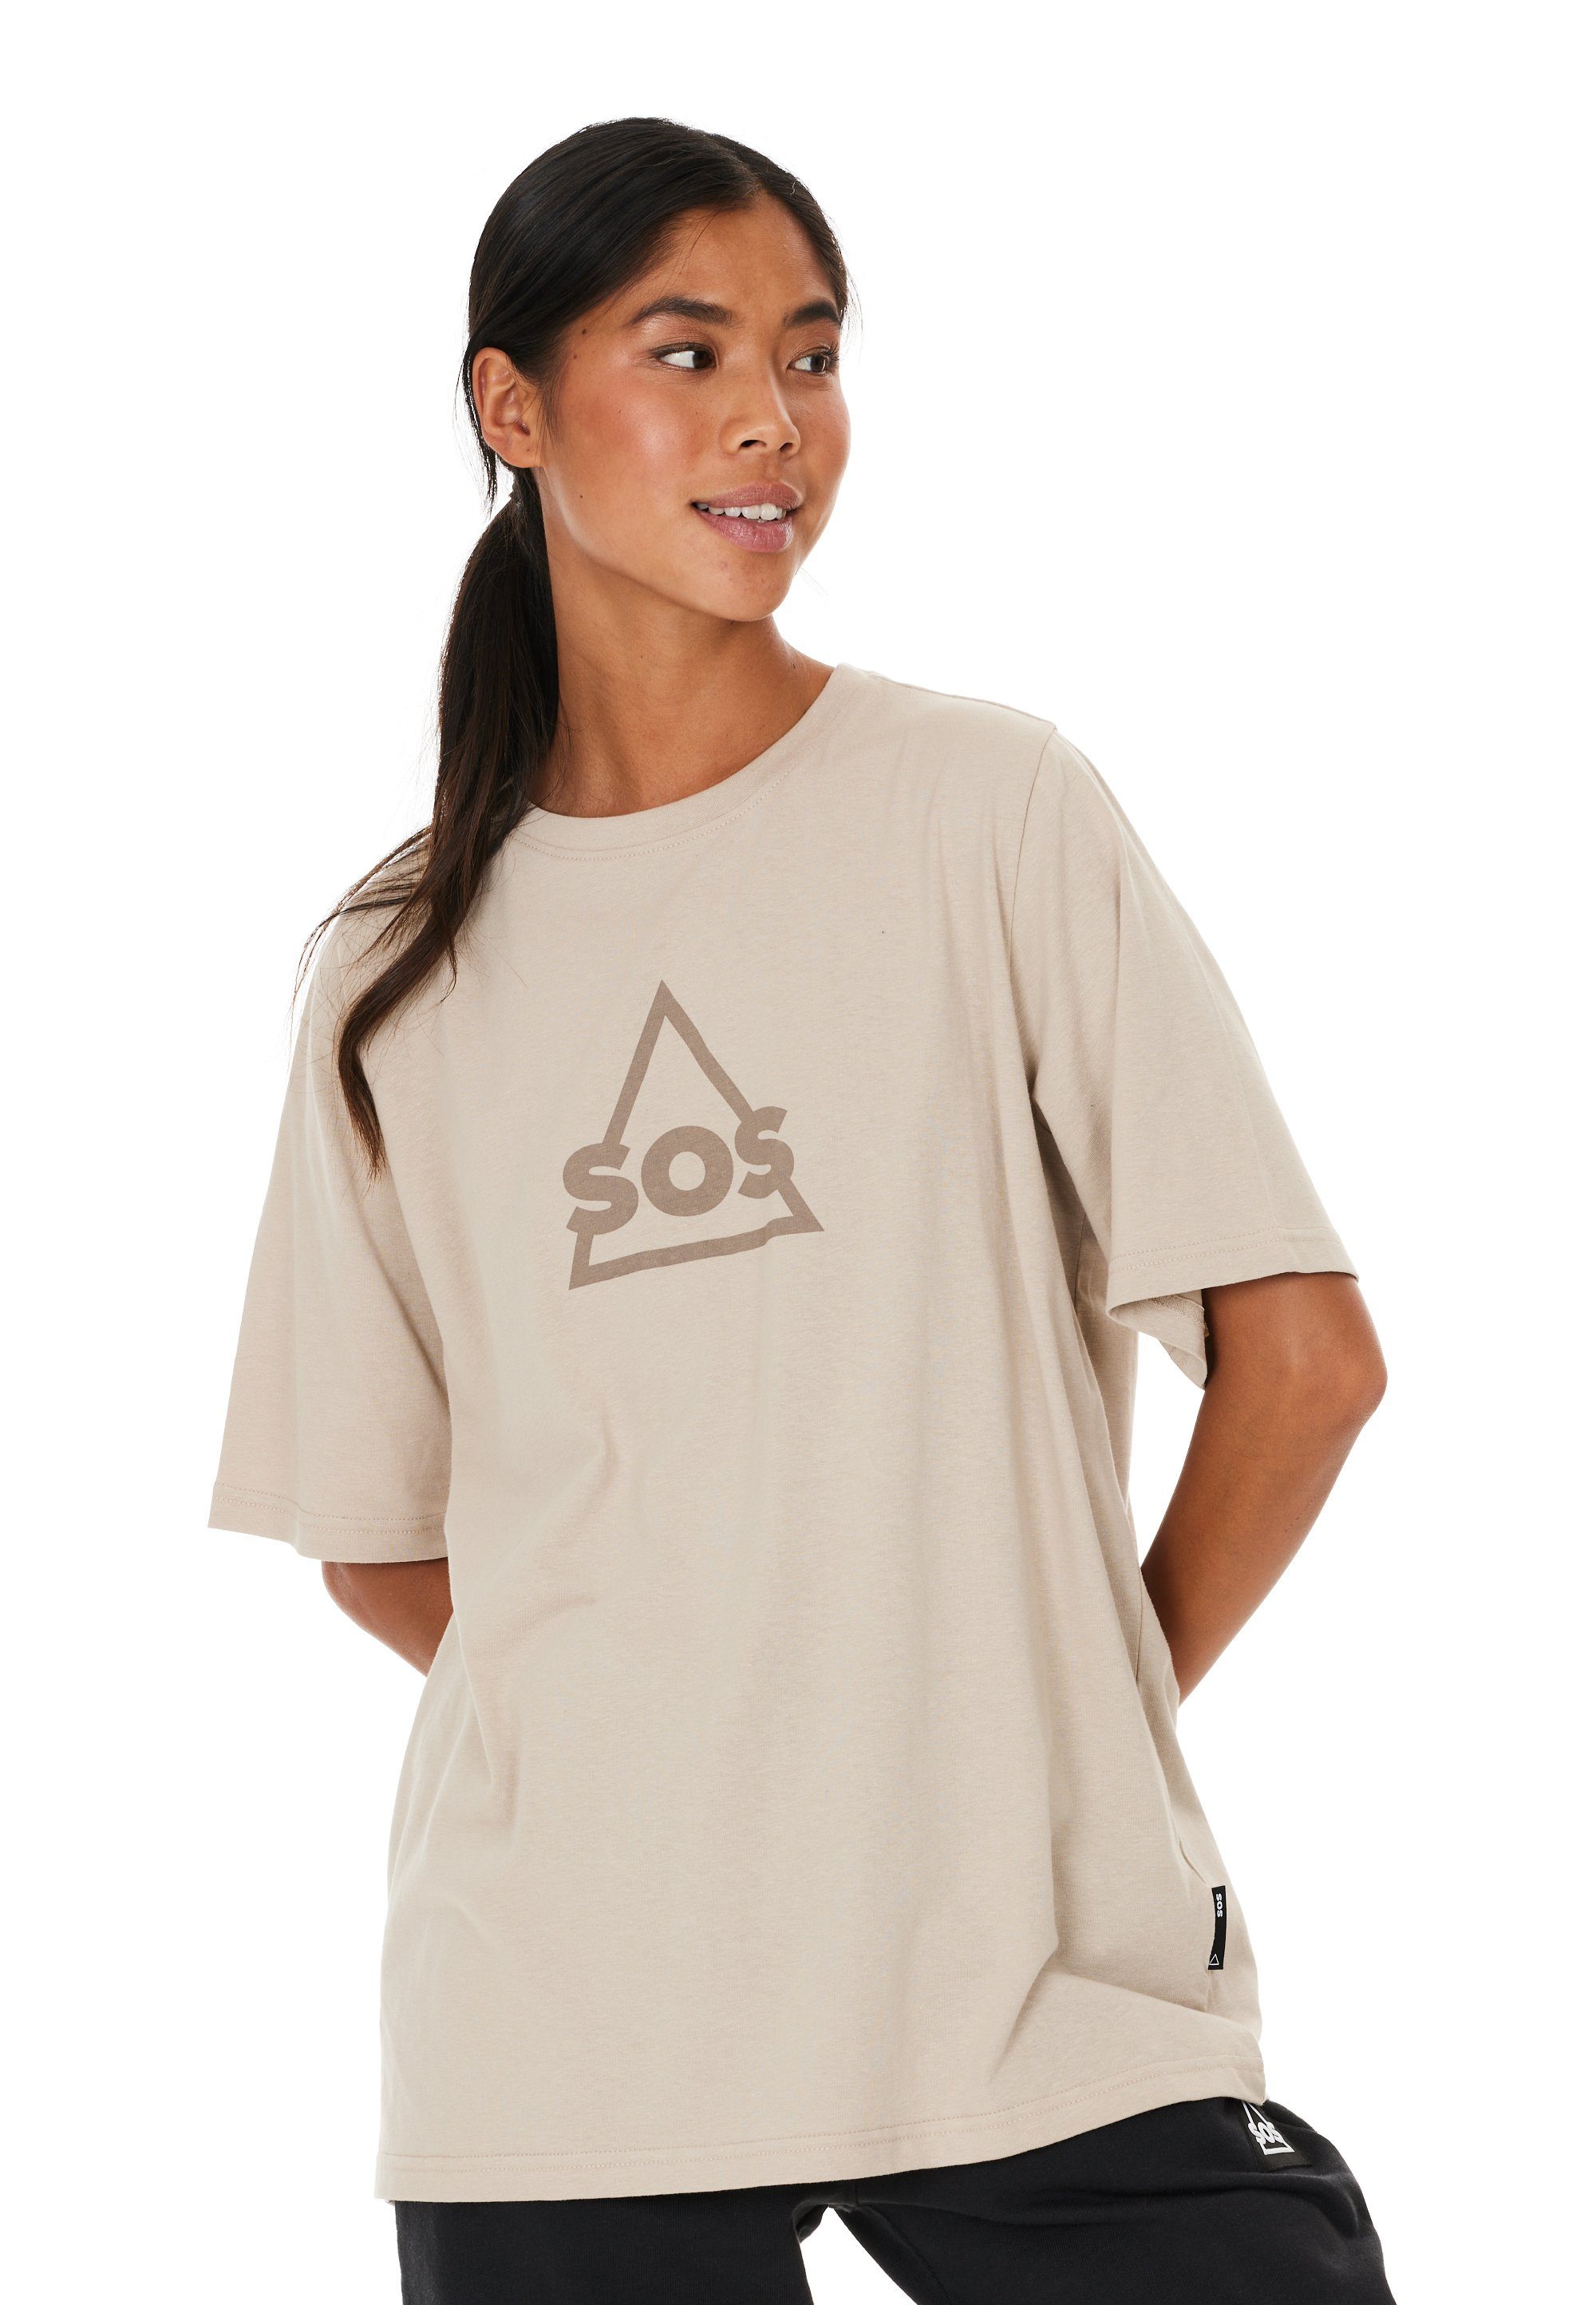 SOS Funktionsshirt Kvitfjell mit trendigem Markenlogo auf der Front taupe | Funktionsshirts